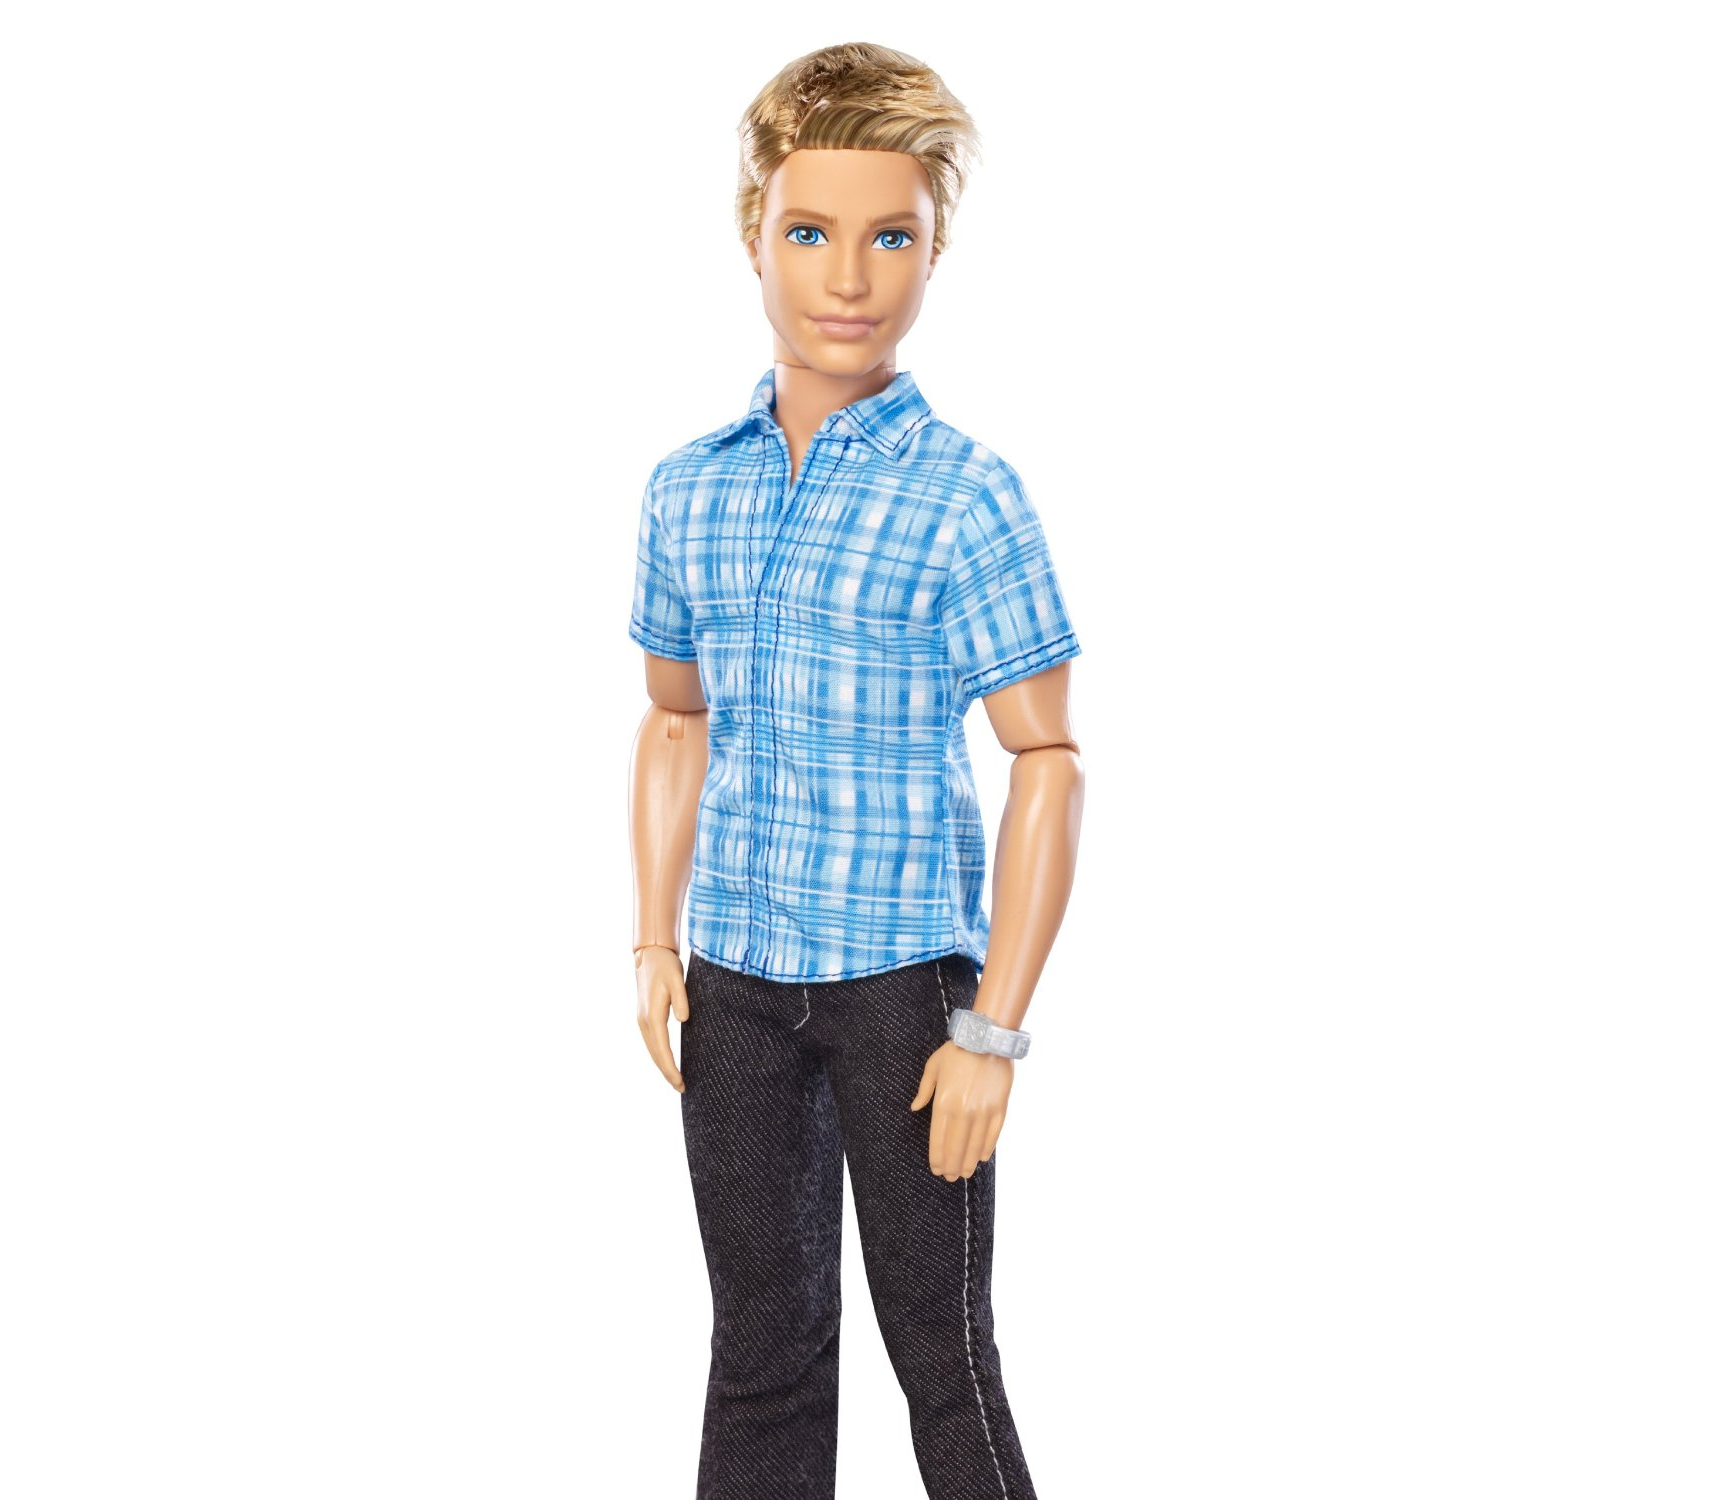 Кукла парень купить. Куклы Барби и Кен. Кен в полный рост. Куклы Кен Массин. Barbie кукла Кен.